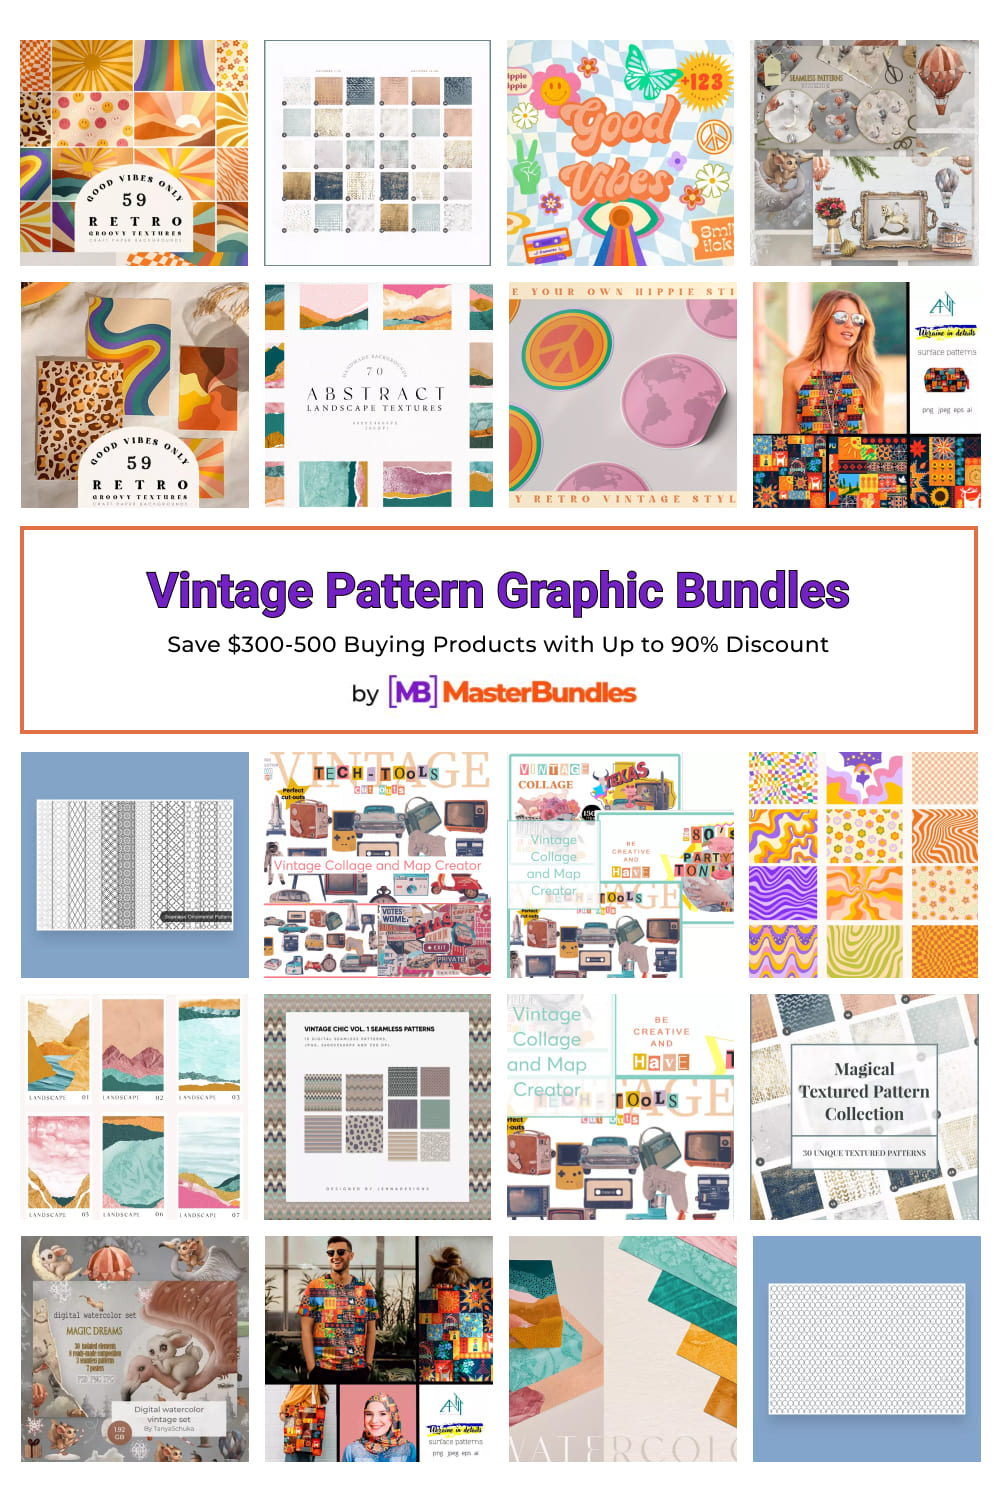 Vintage Pattern Graphic Bundles for Pinterest.